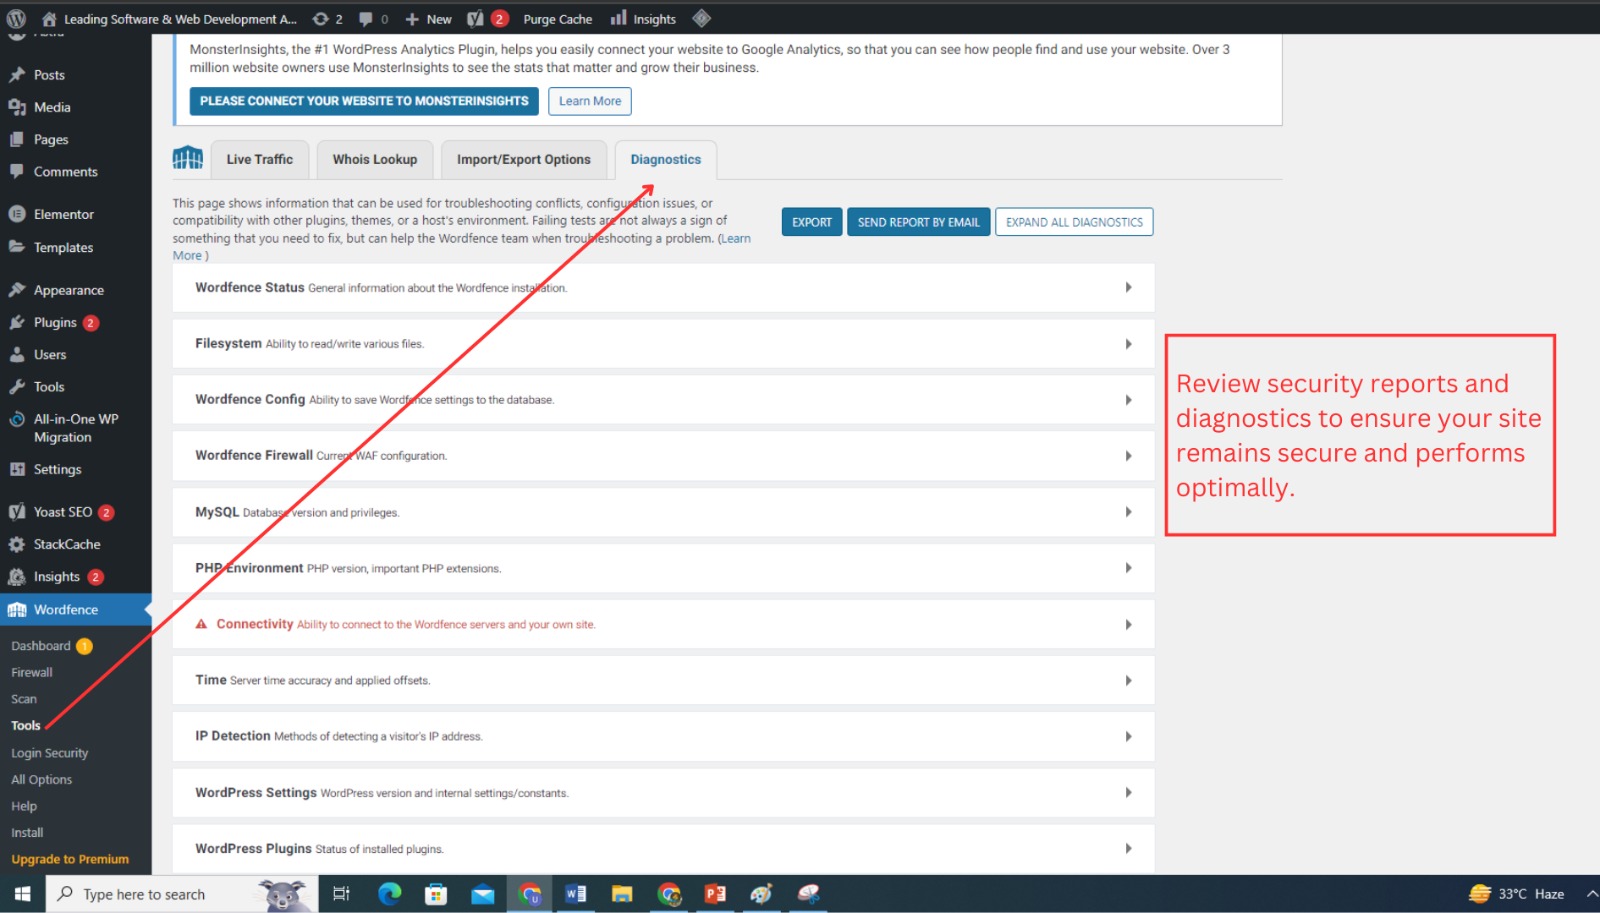 WordPress settings page, displaying